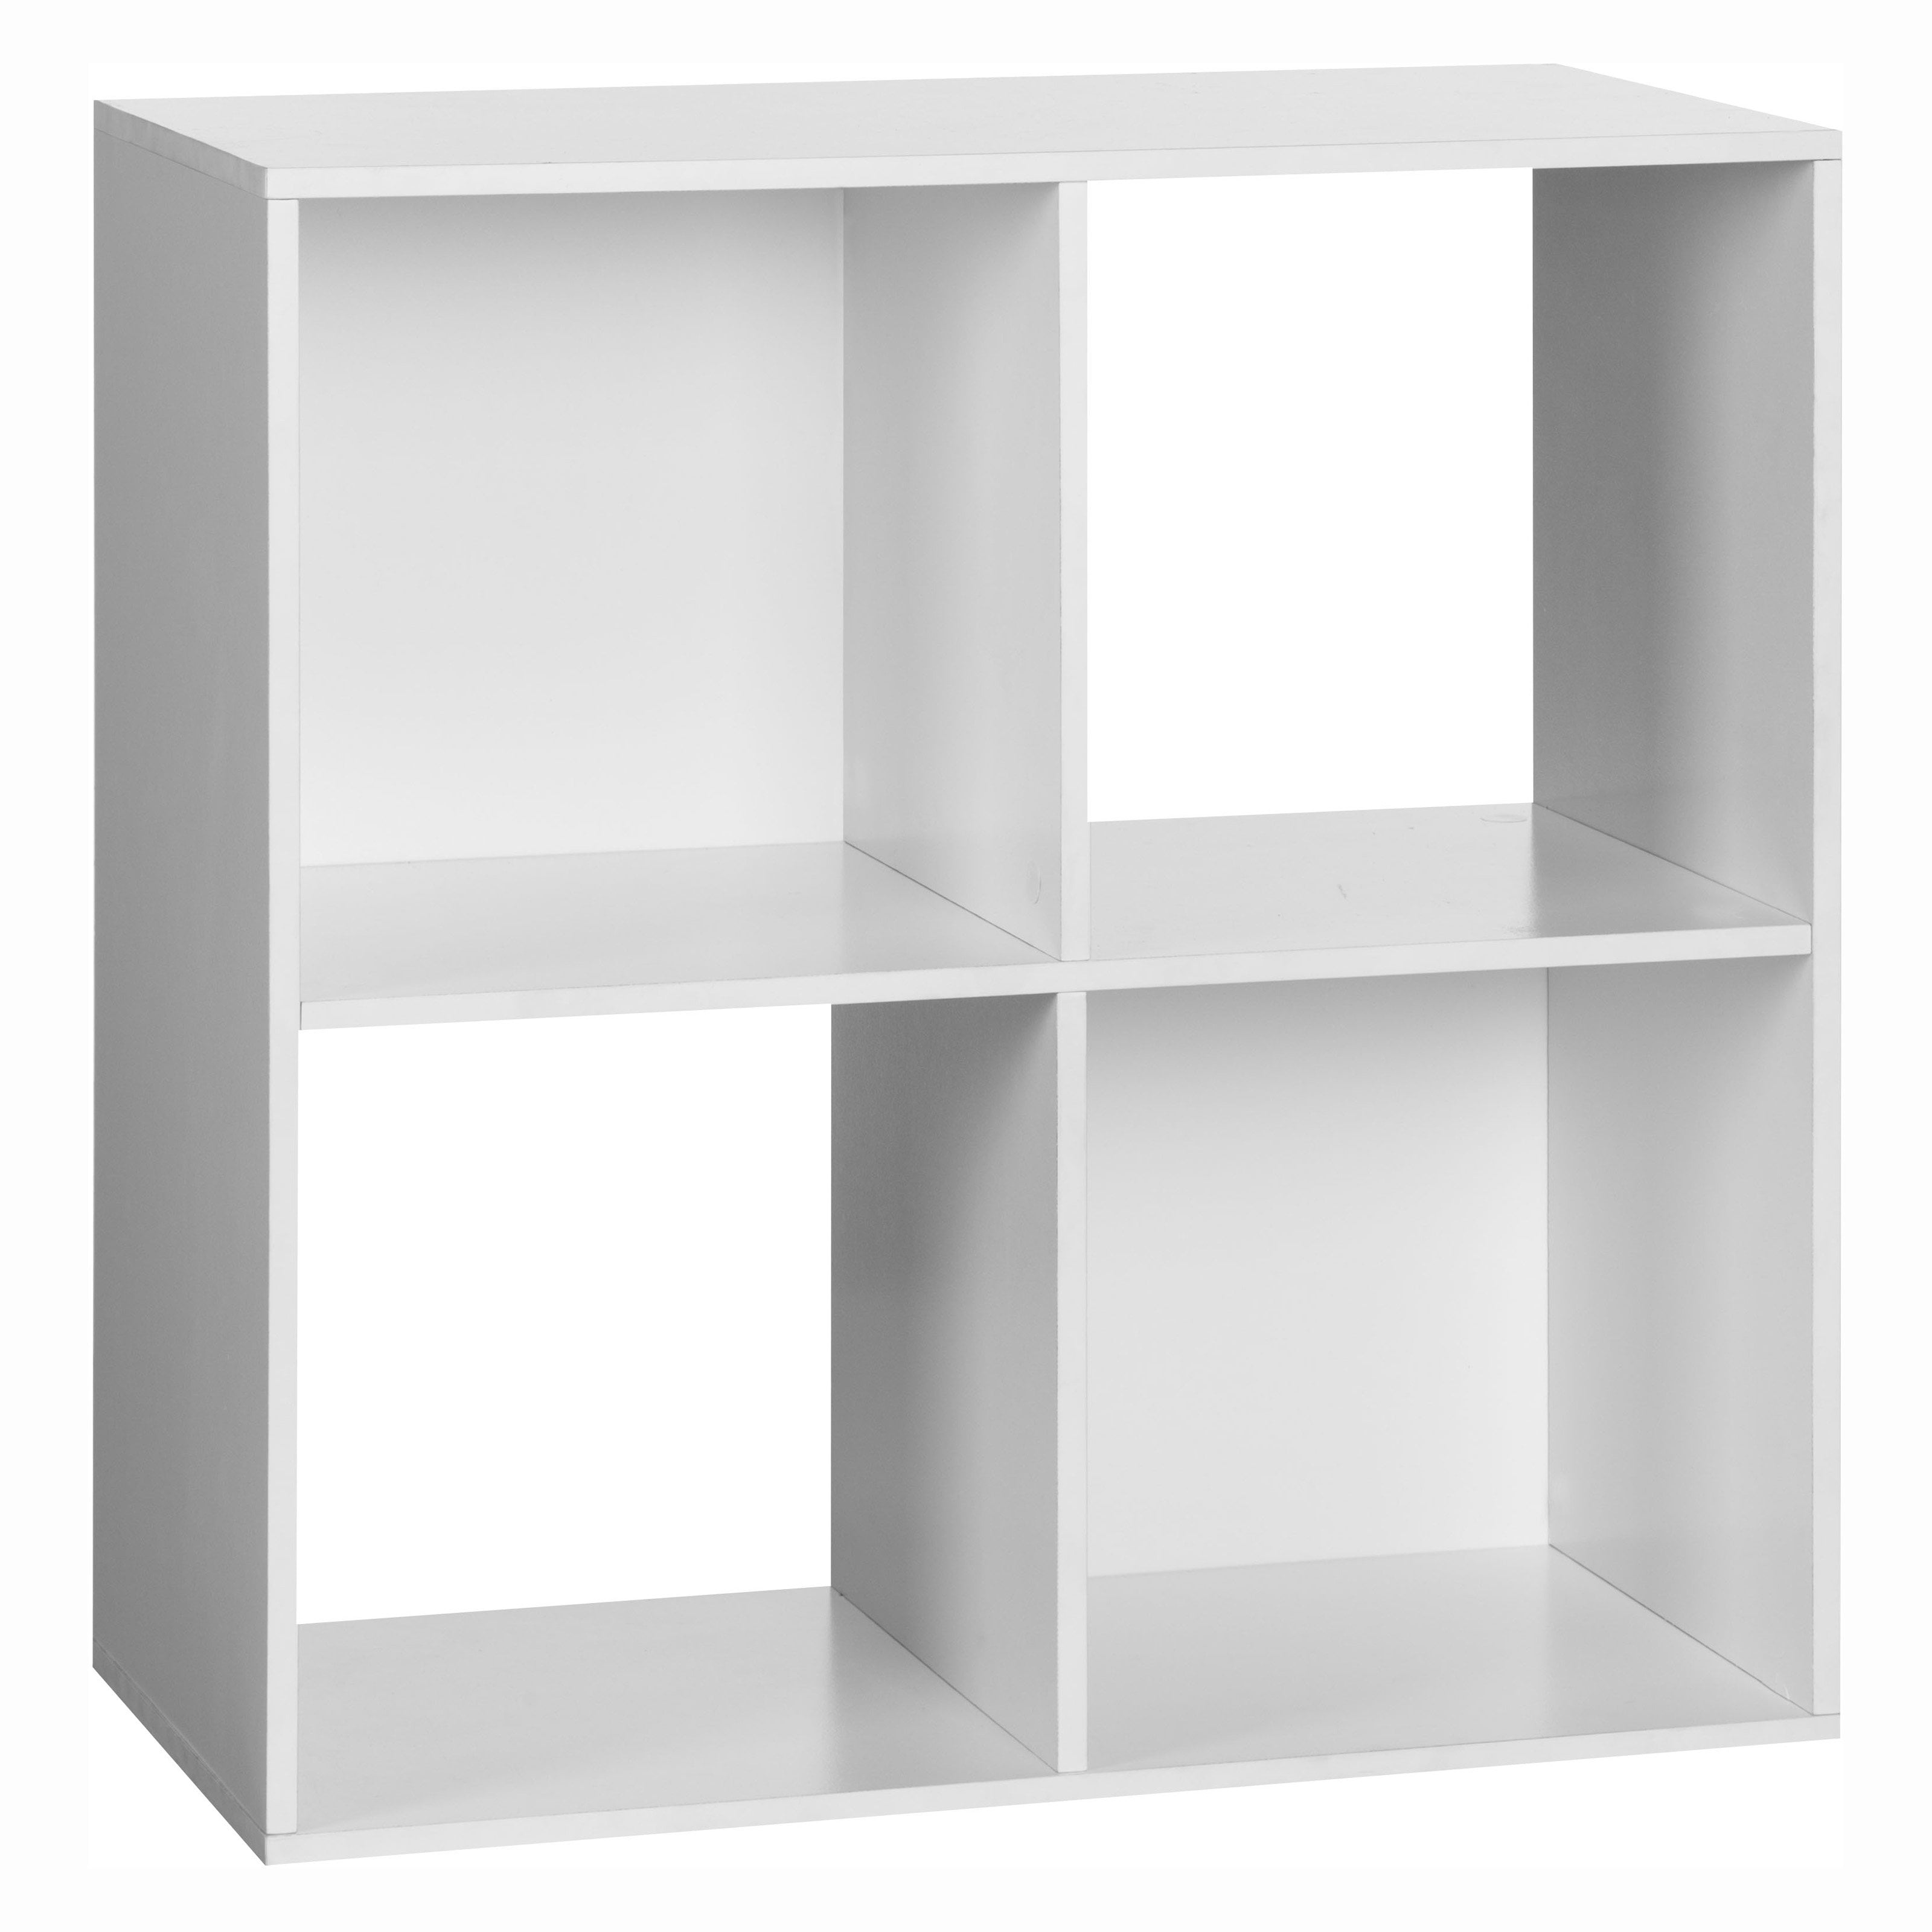 Mainstays 3 Cube Storage Organizer Furniture Bookcases Canyon Walnut Home Garden 